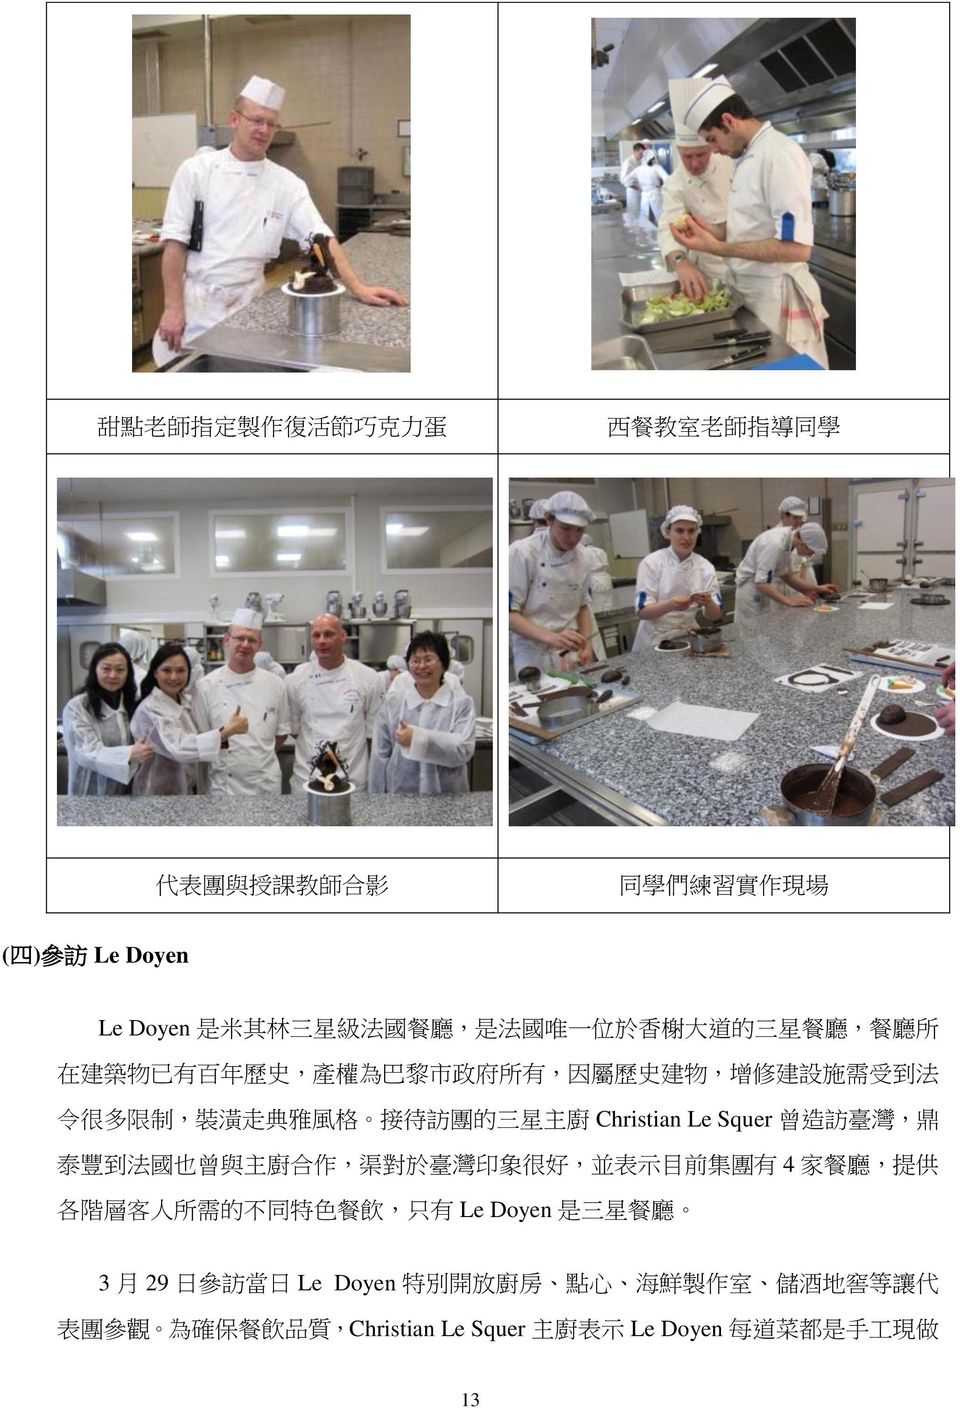 Christian Le Squer 曾 造 訪 臺 灣, 鼎 泰 豐 到 法 國 也 曾 與 主 廚 合 作, 渠 對 於 臺 灣 印 象 很 好, 並 表 示 目 前 集 團 有 4 家 餐 廳, 提 供 各 階 層 客 人 所 需 的 不 同 特 色 餐 飲, 只 有 Le Doyen 是